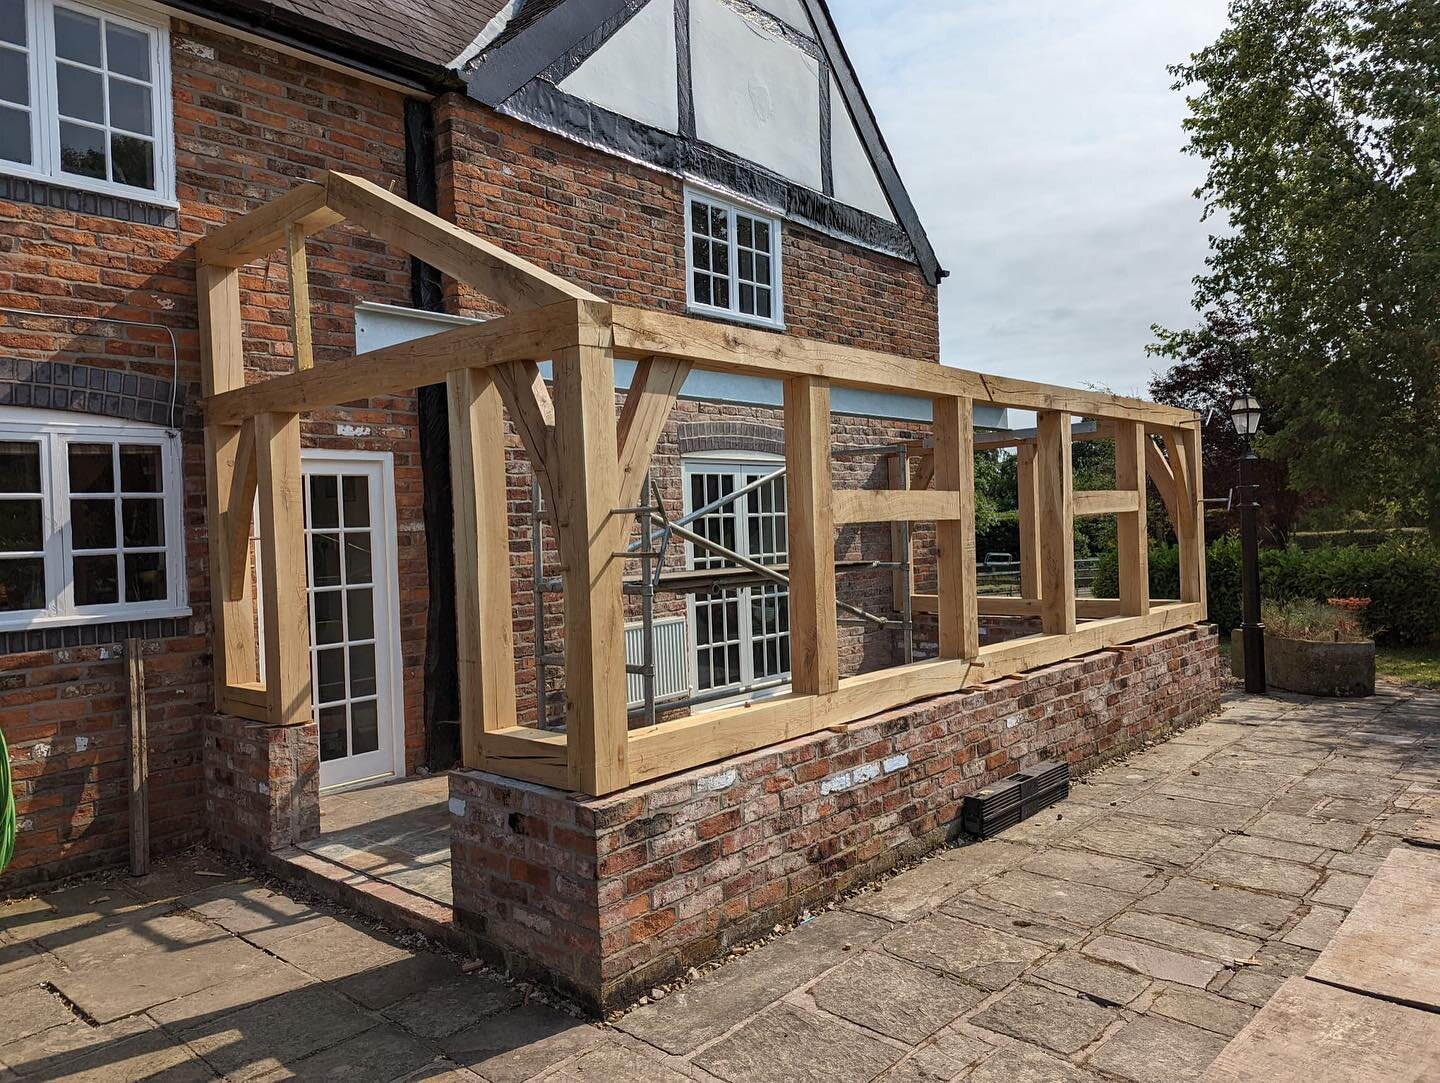 New oak conservatory taking shape 👏🏻